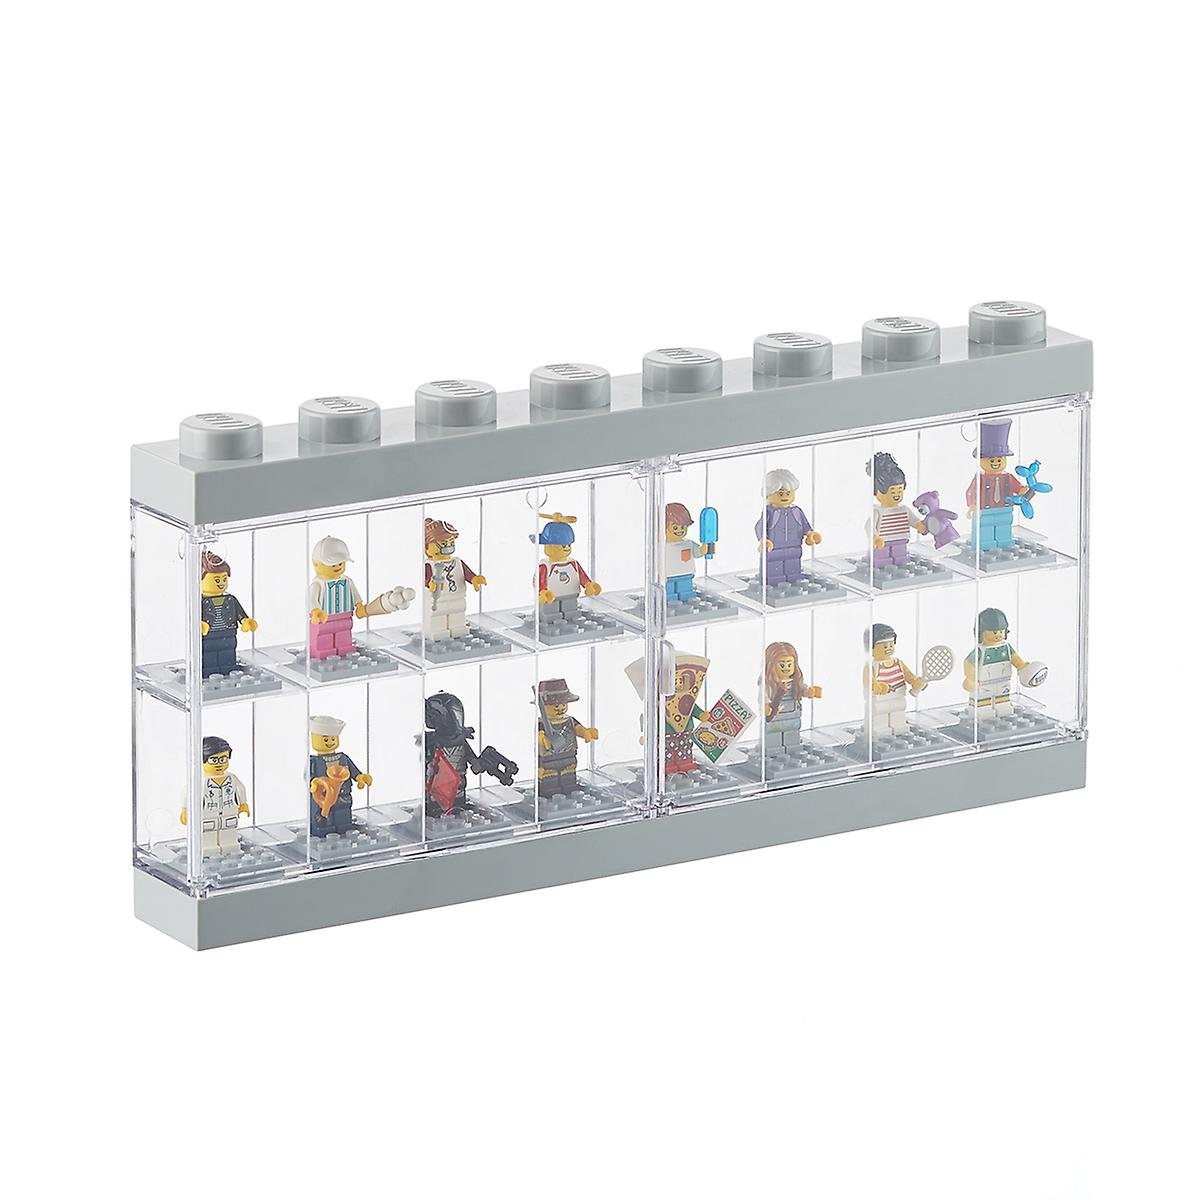 LEGO Minifigure Display Case